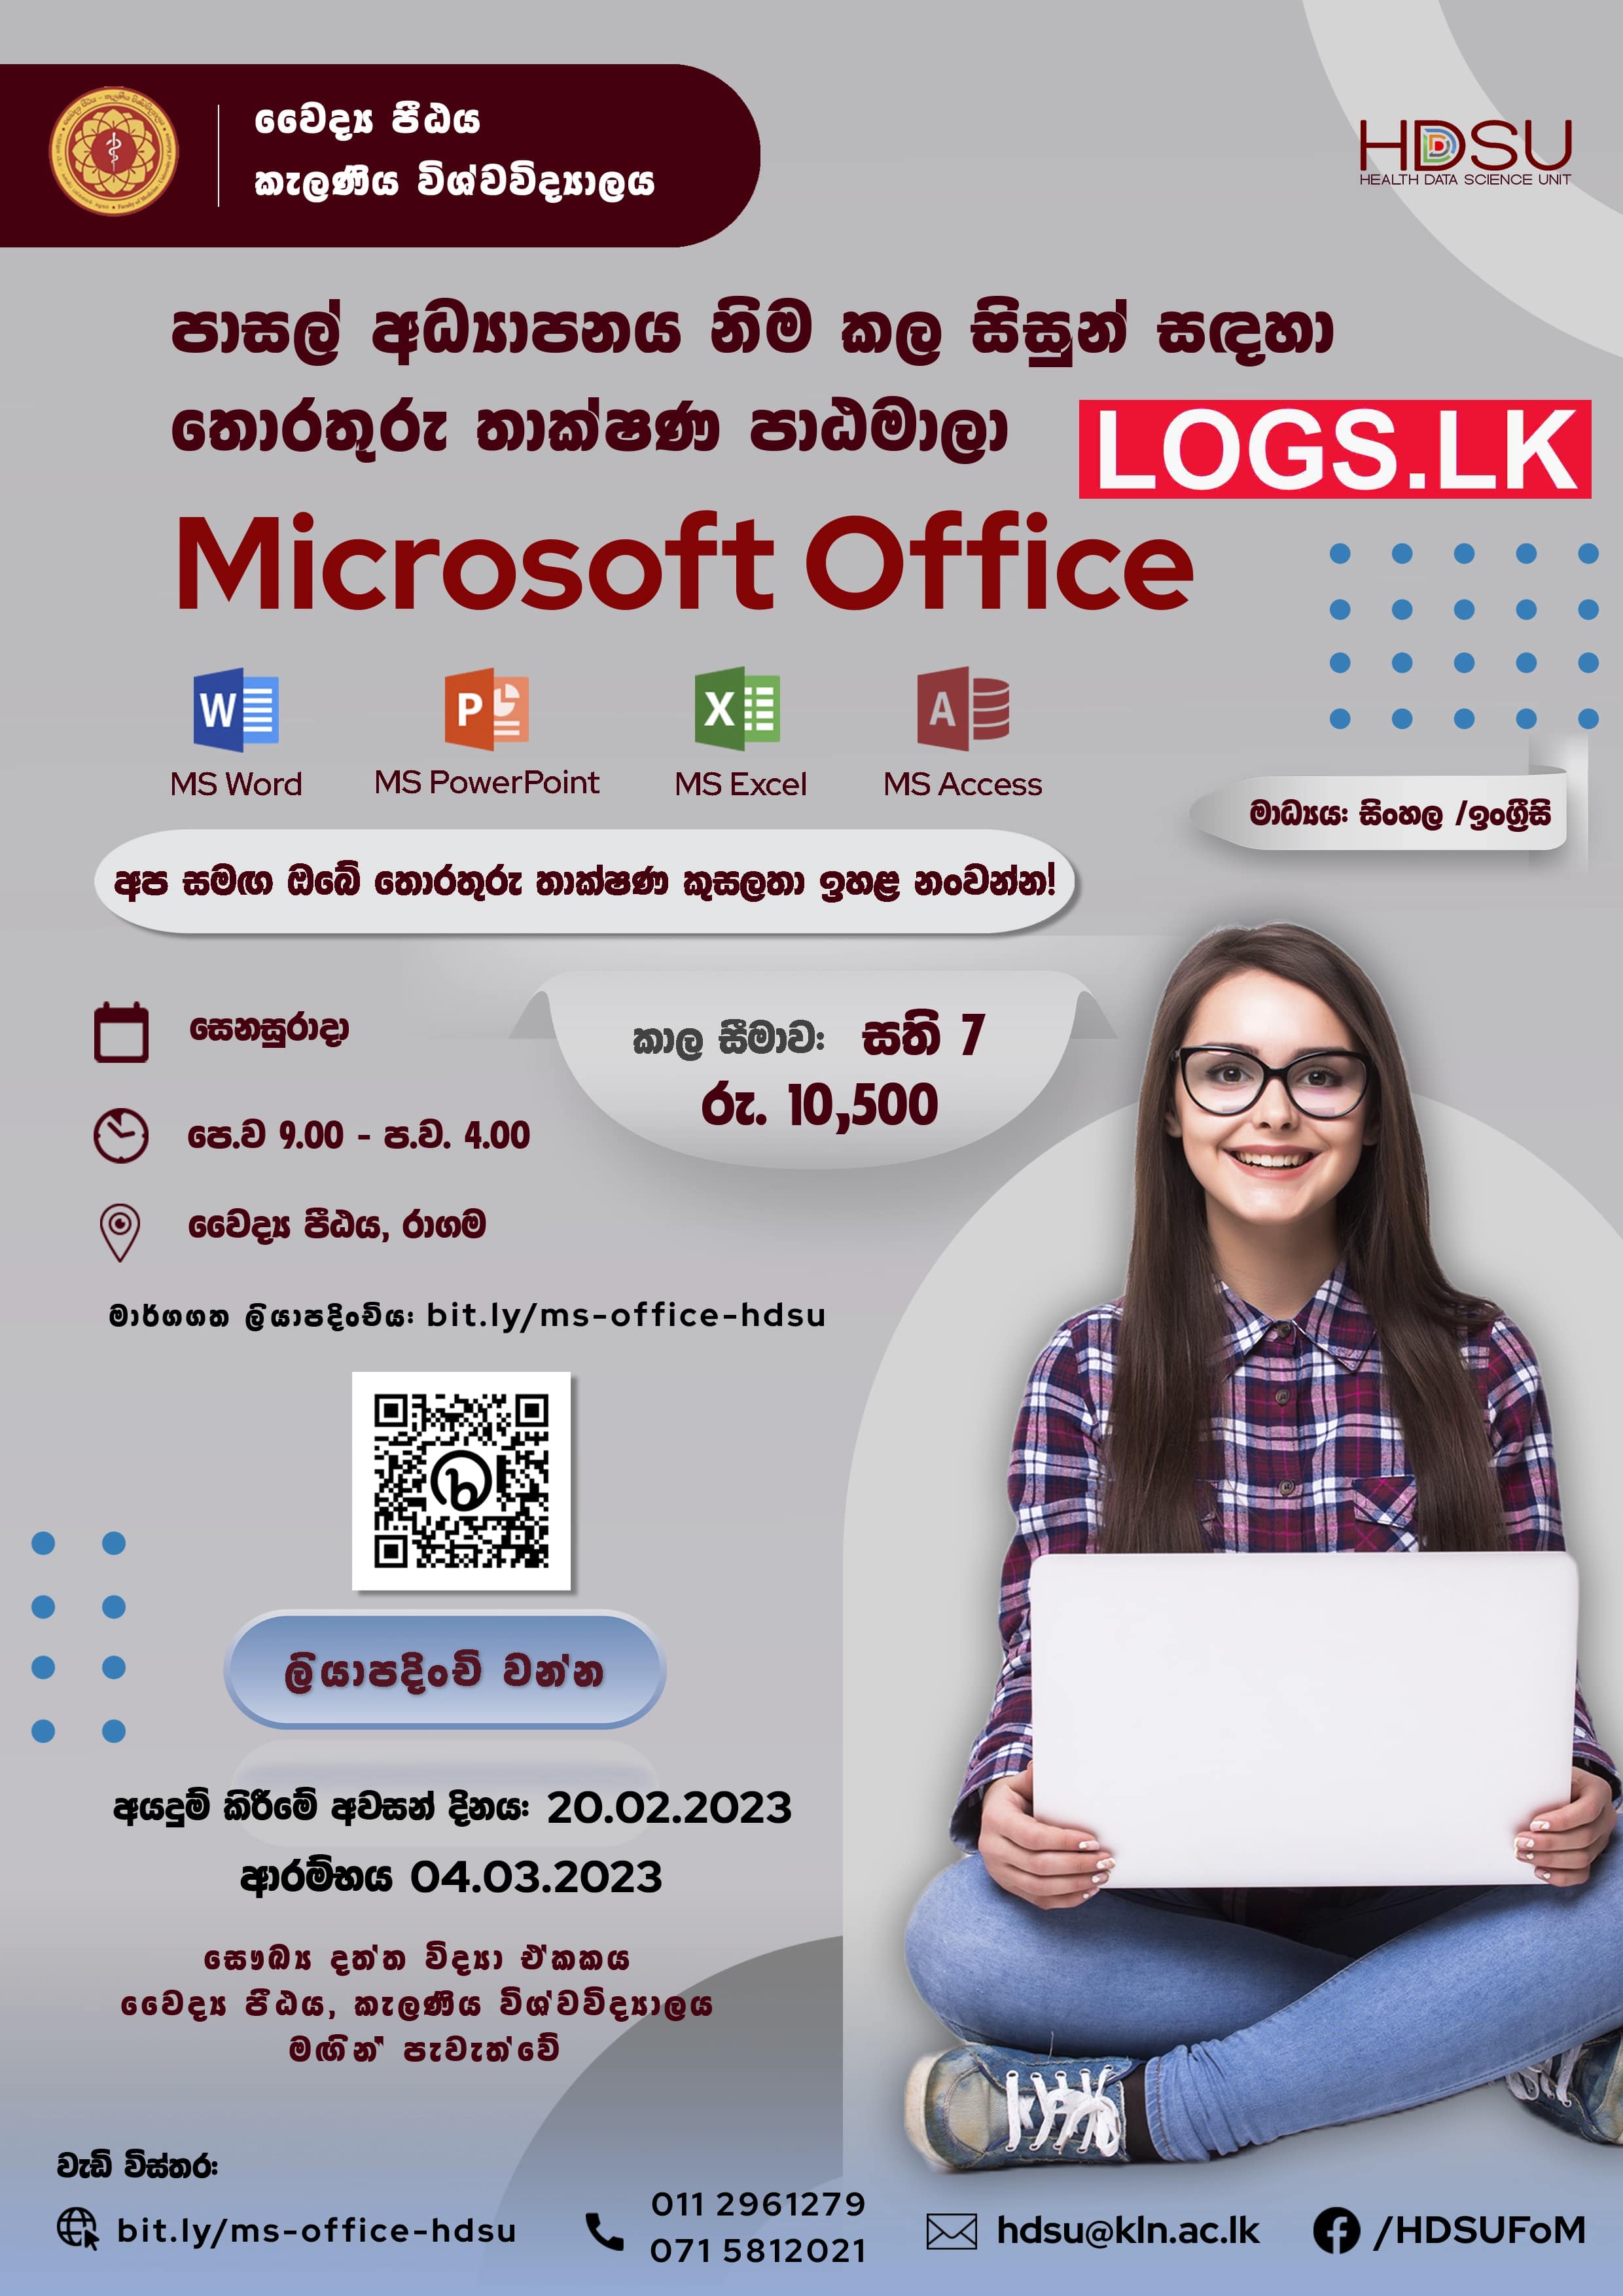 IT Courses for School Leavers 2023 - University of Kelaniya Application Form, Details Download